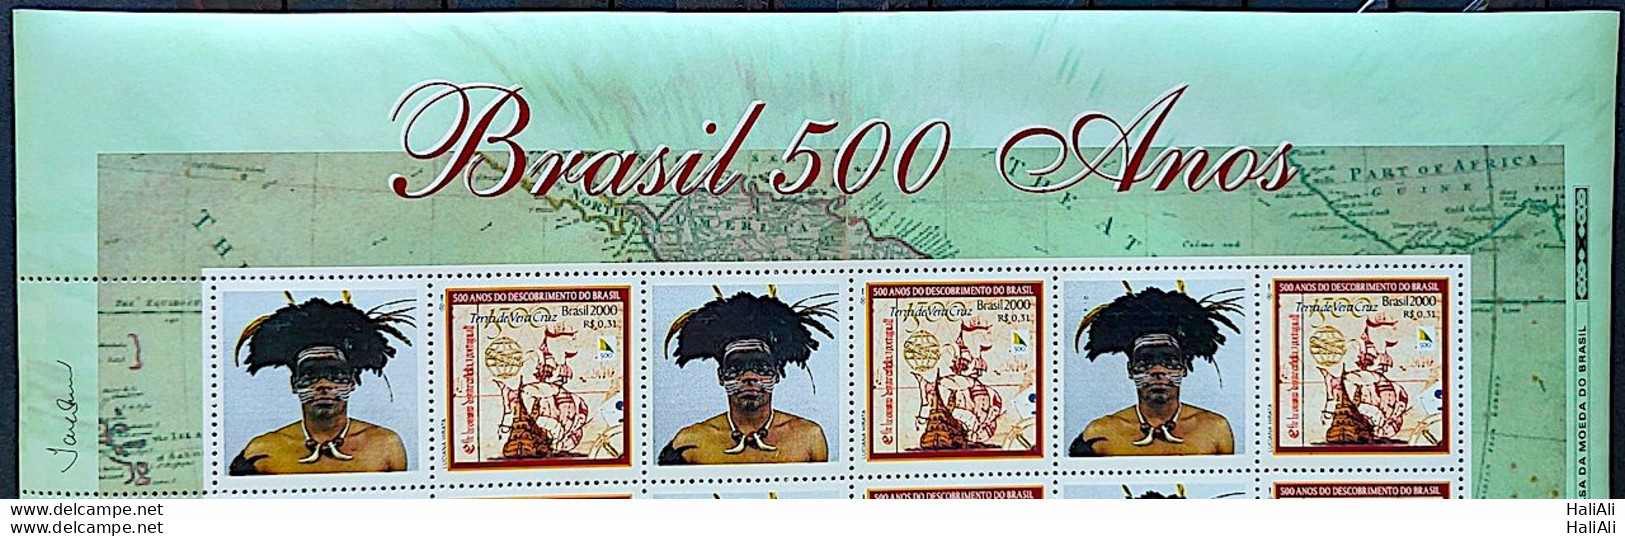 C 2254 Brazil Stamp Custom Discovery Of Brazil Indian Portugal 2000 3 Brazil Stamps Vignette Brasil 500 Years - Unused Stamps